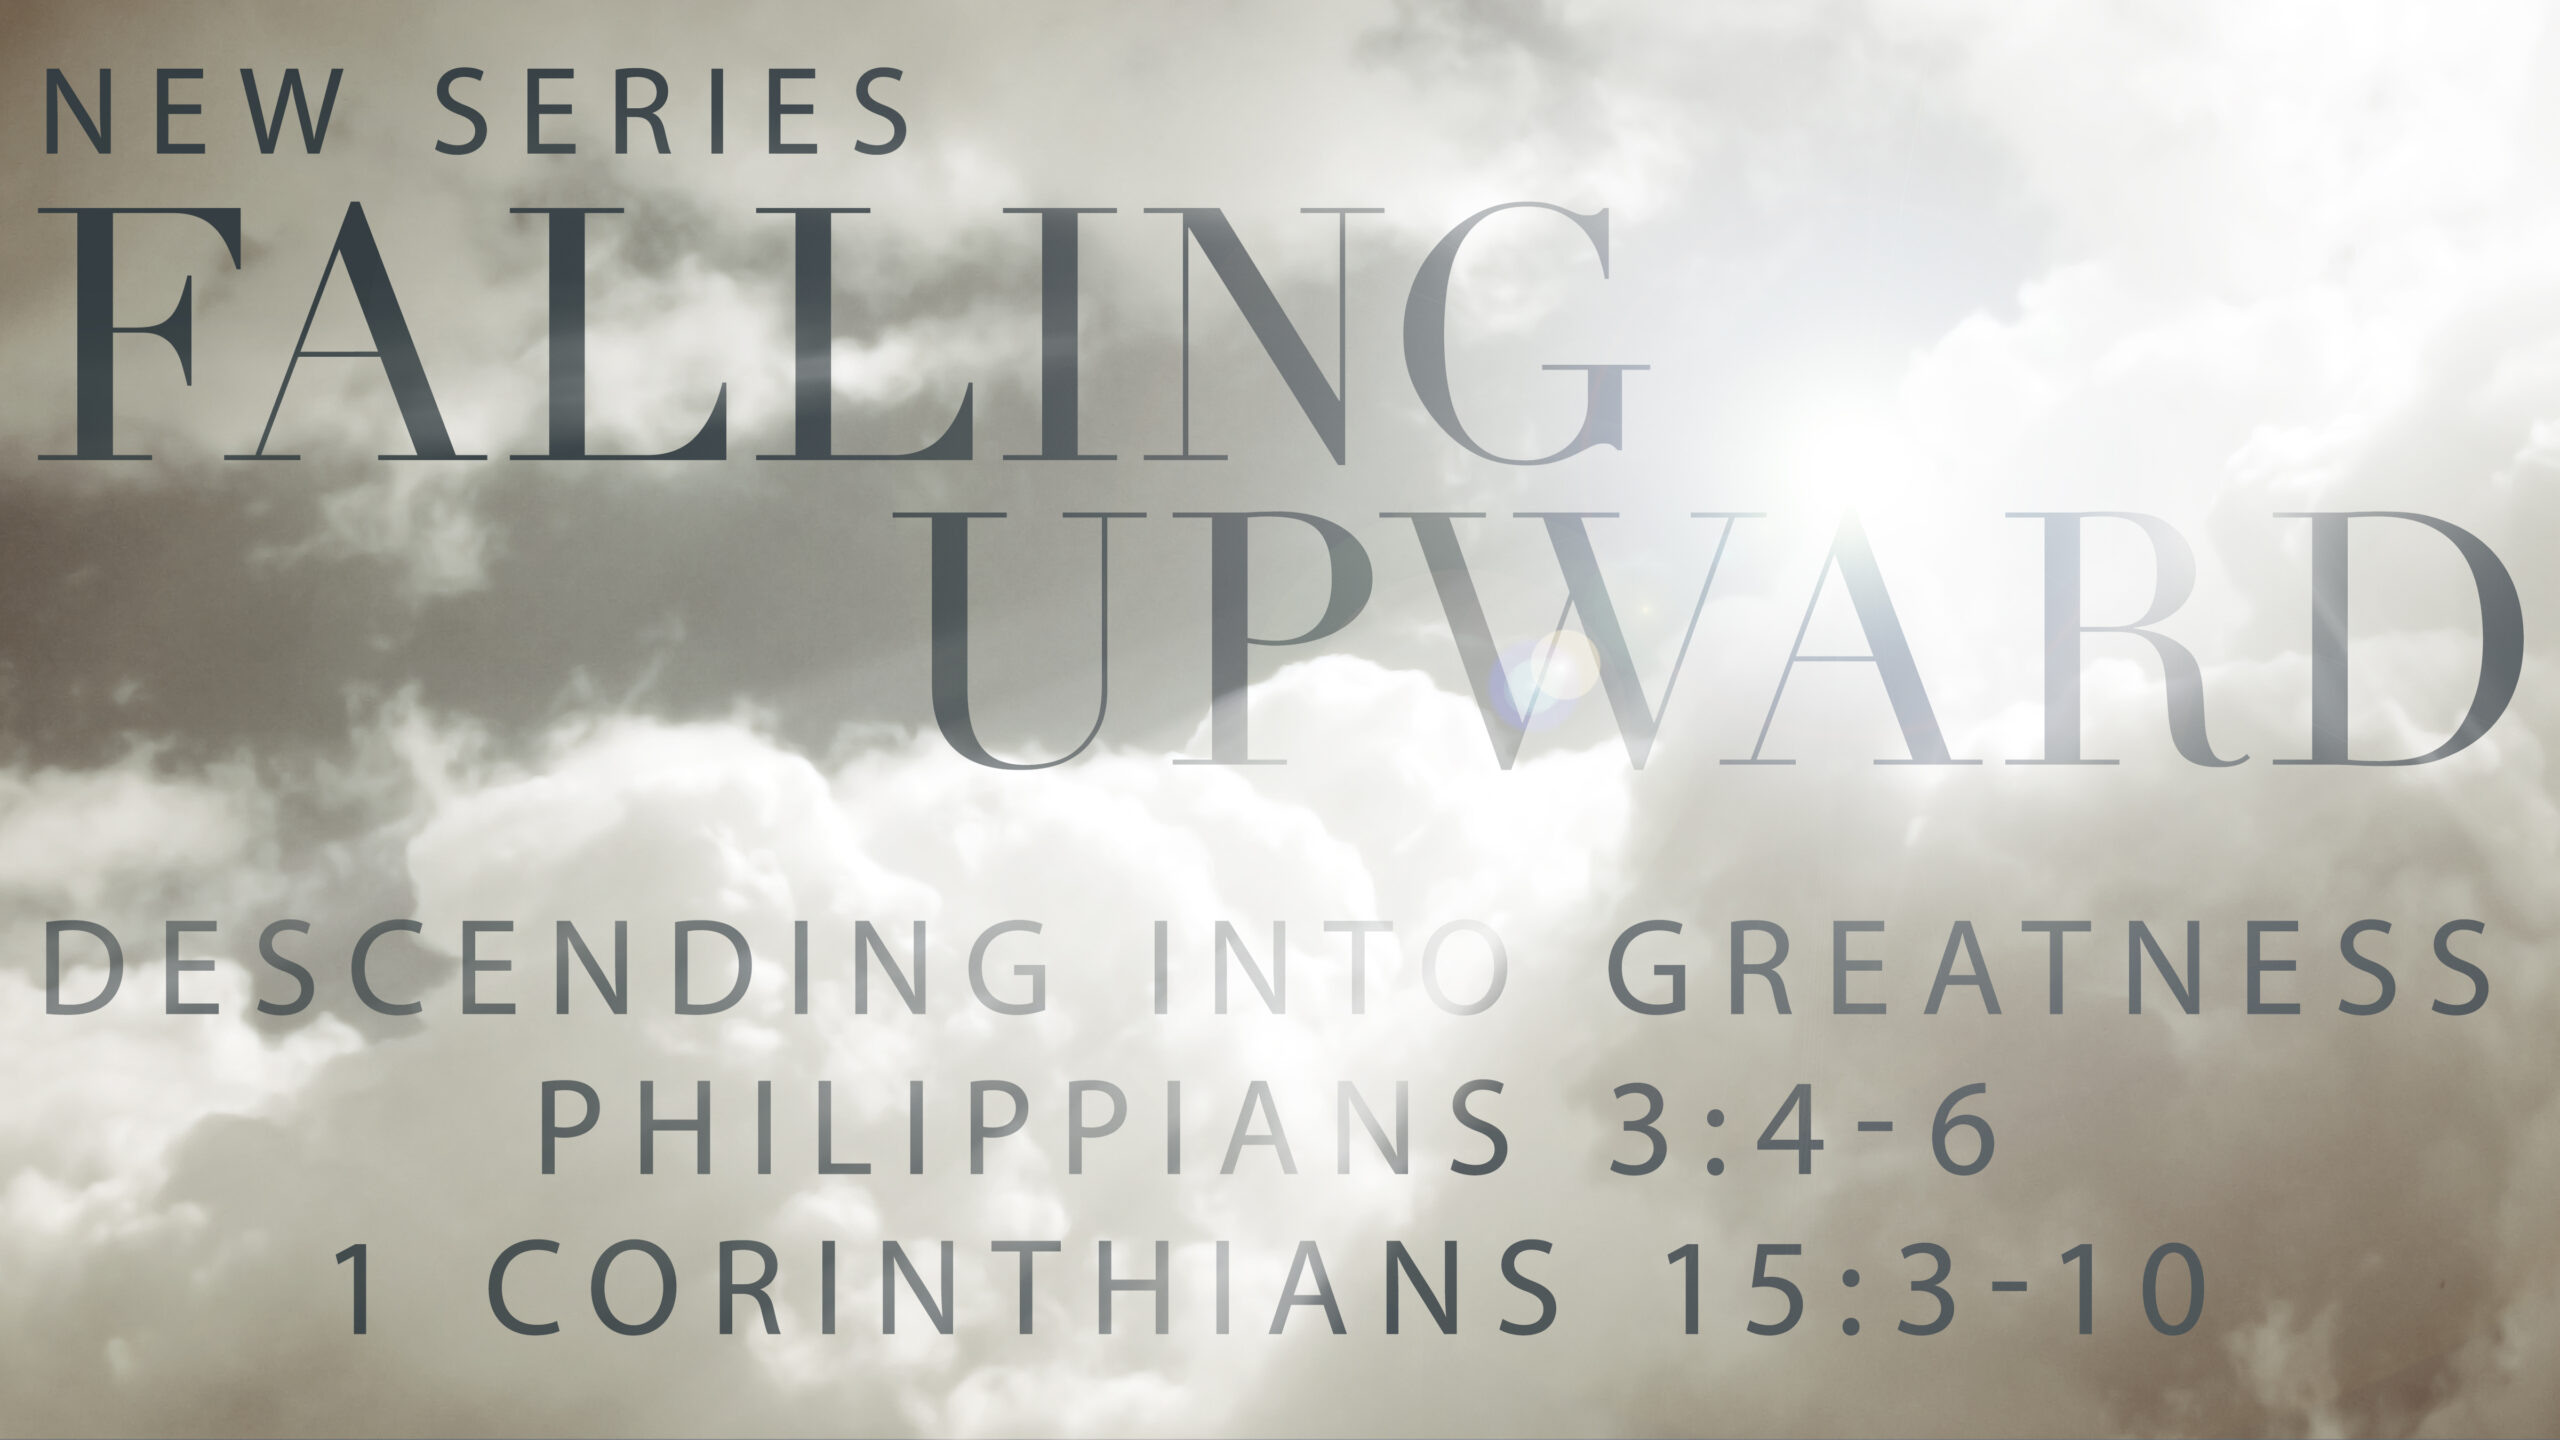 Falling Upward Pat 1 “Descending into Greatness” (Traditional)